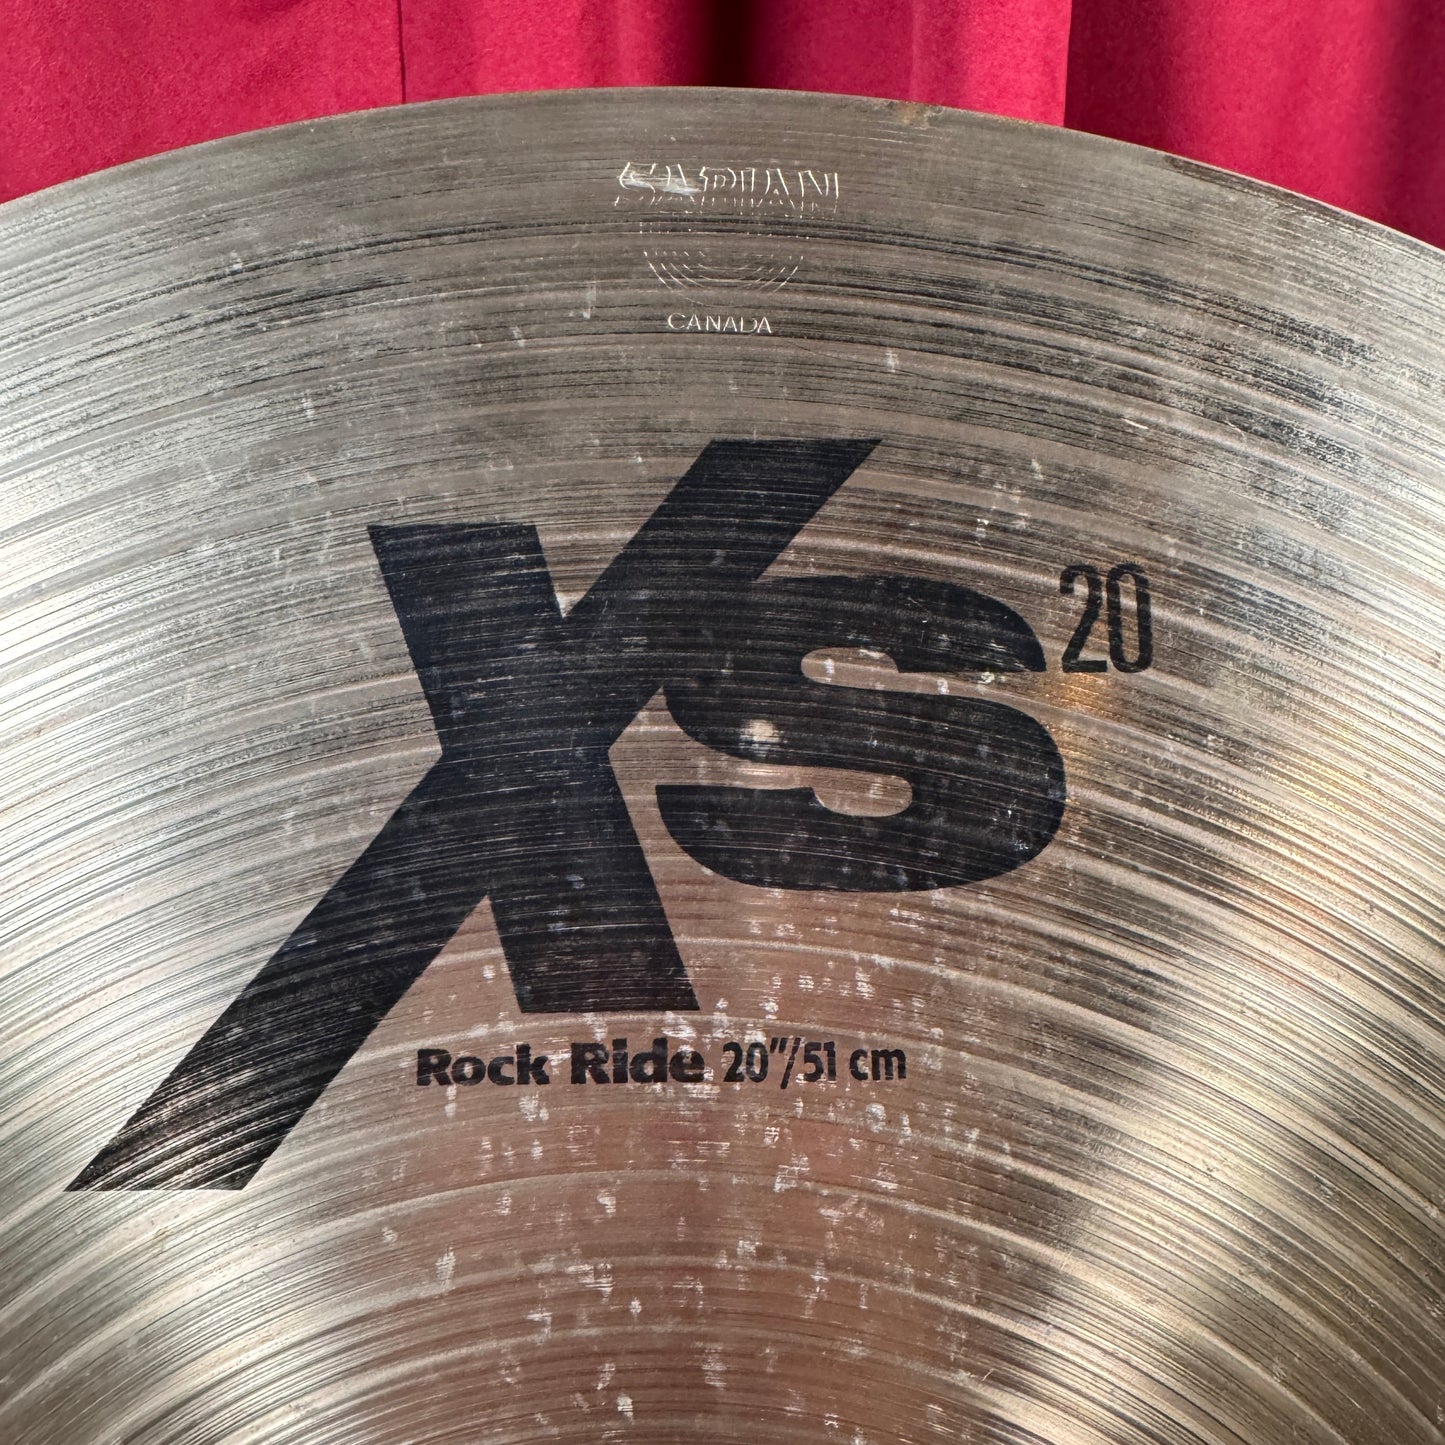 20" Sabian XS20 Rock Ride Cymbal 2834g *Video Demo*